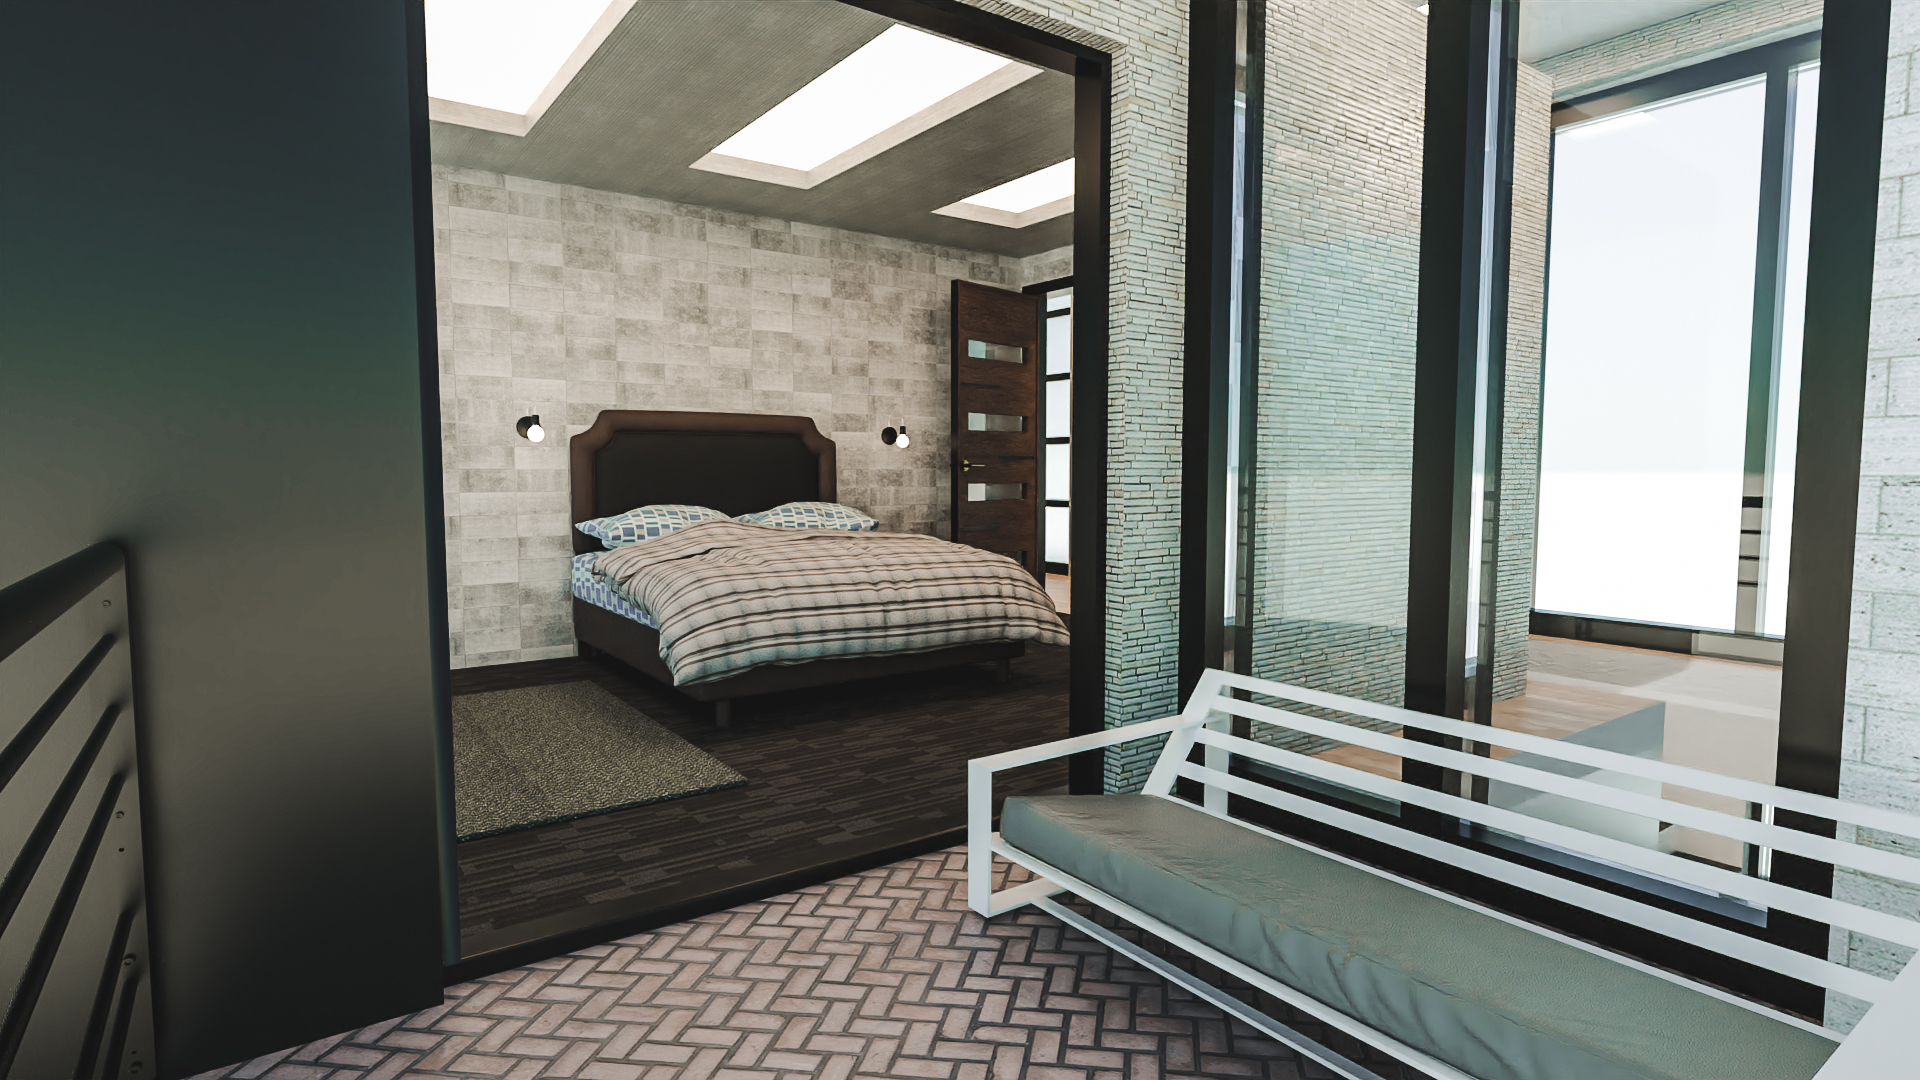 Modern Leisure House by: Tesla3dCorp, 3D Models by Daz 3D